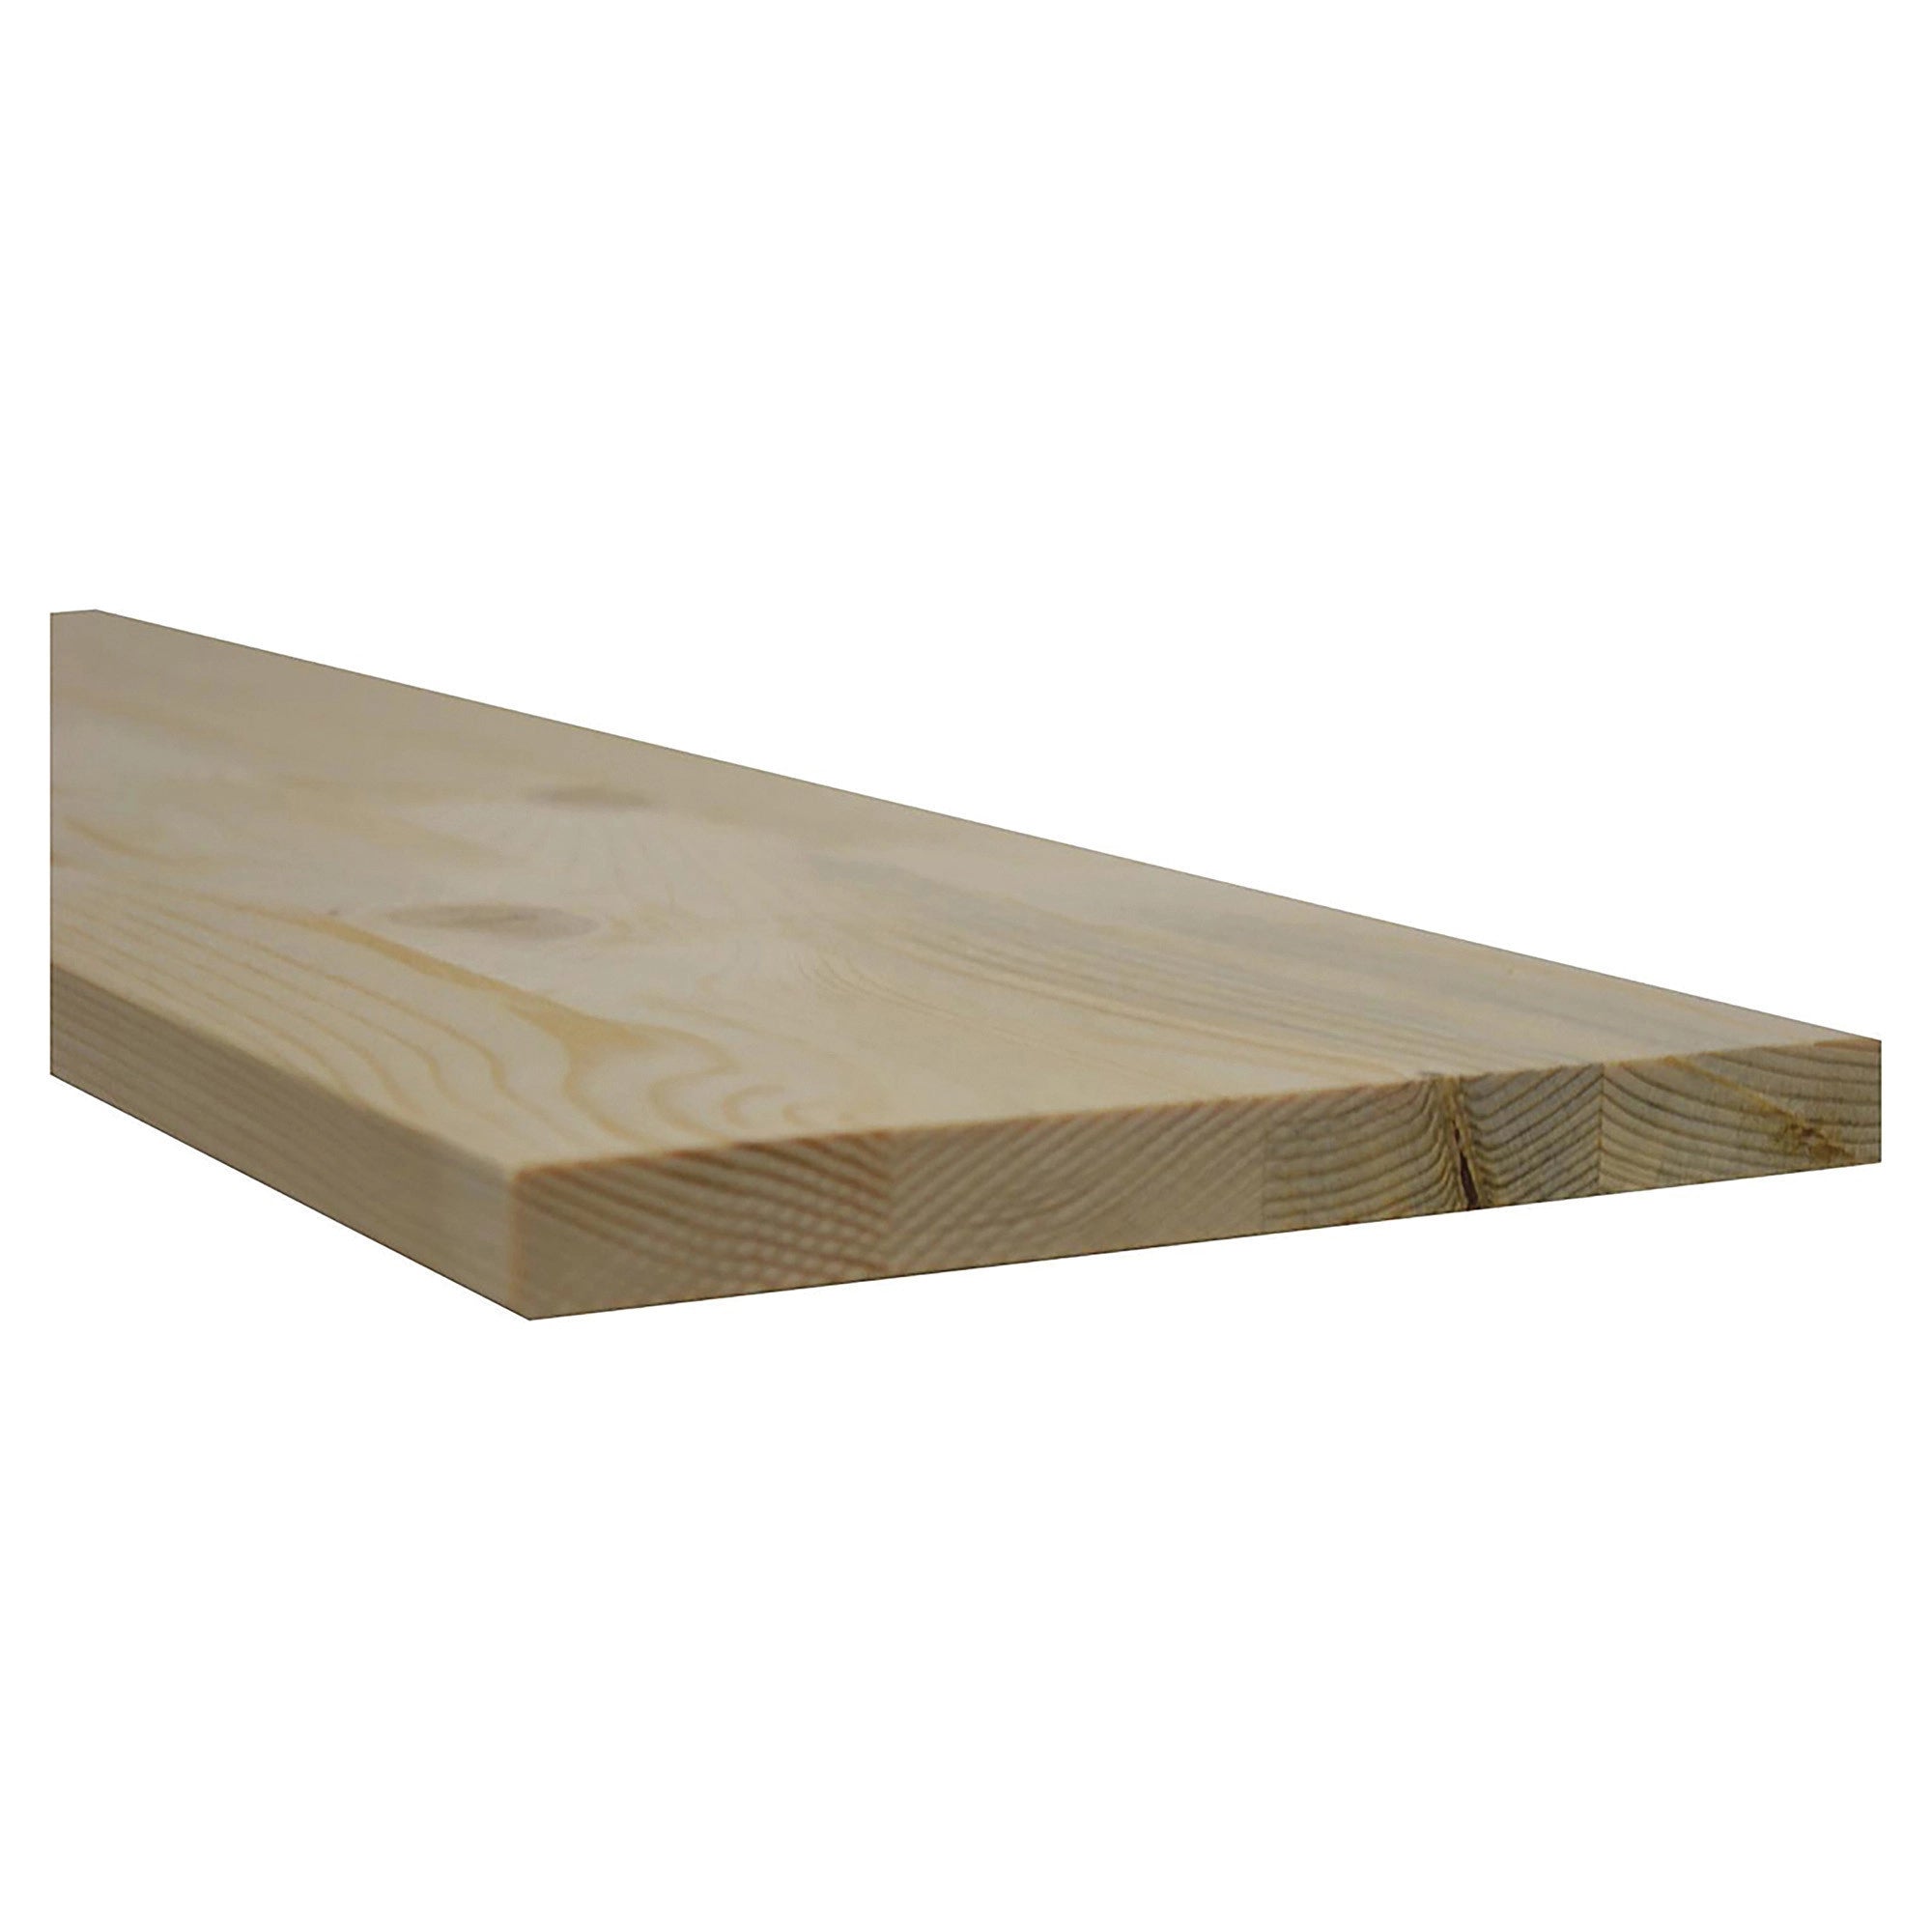 TECNOMAT Construction wood